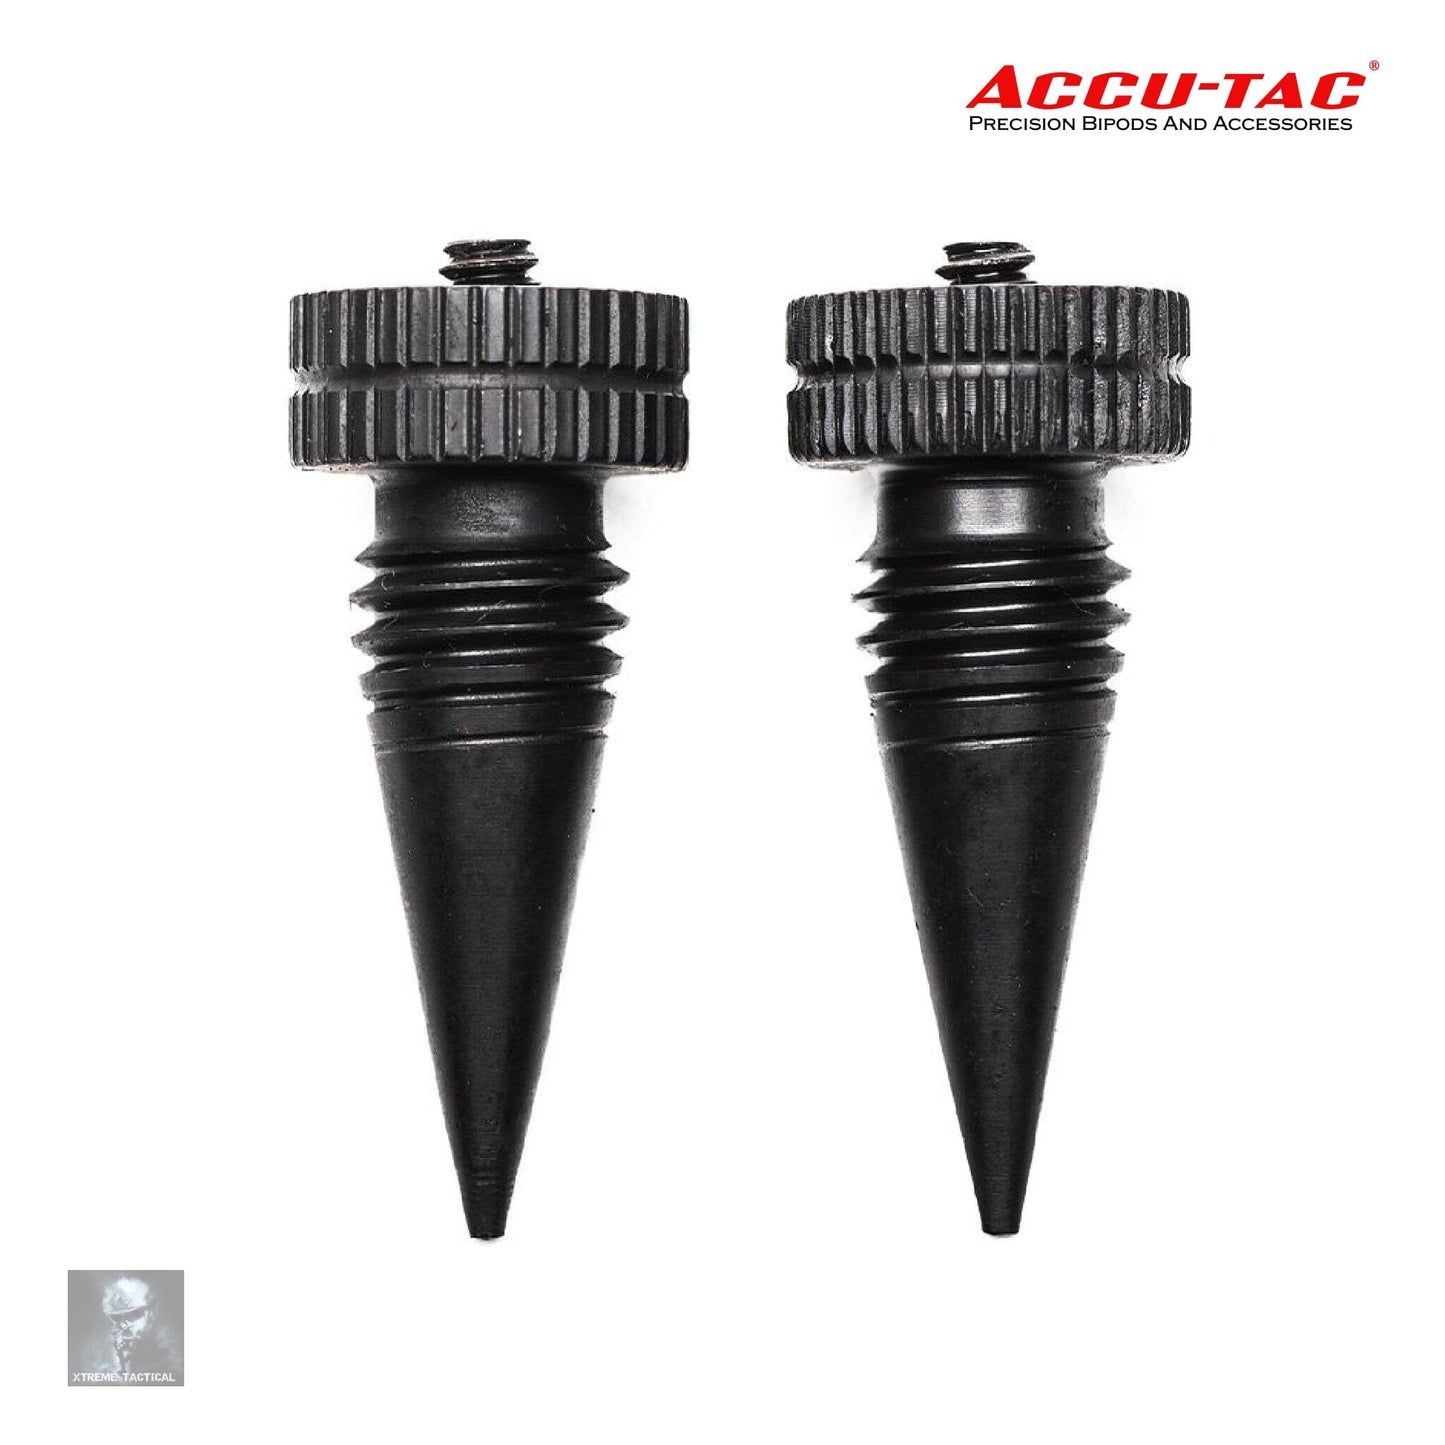 Accu-Tac Bipod G2 Spiked Feet Set - LRS-0200 Bipod Accessories Accu-Tac 